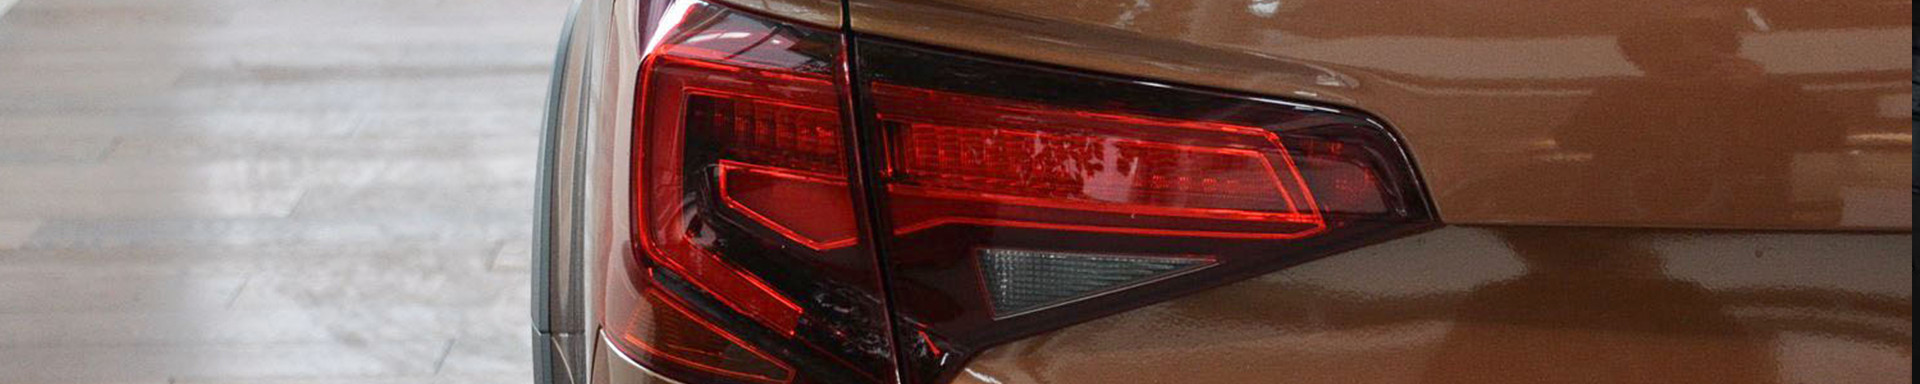 Car Tail Light